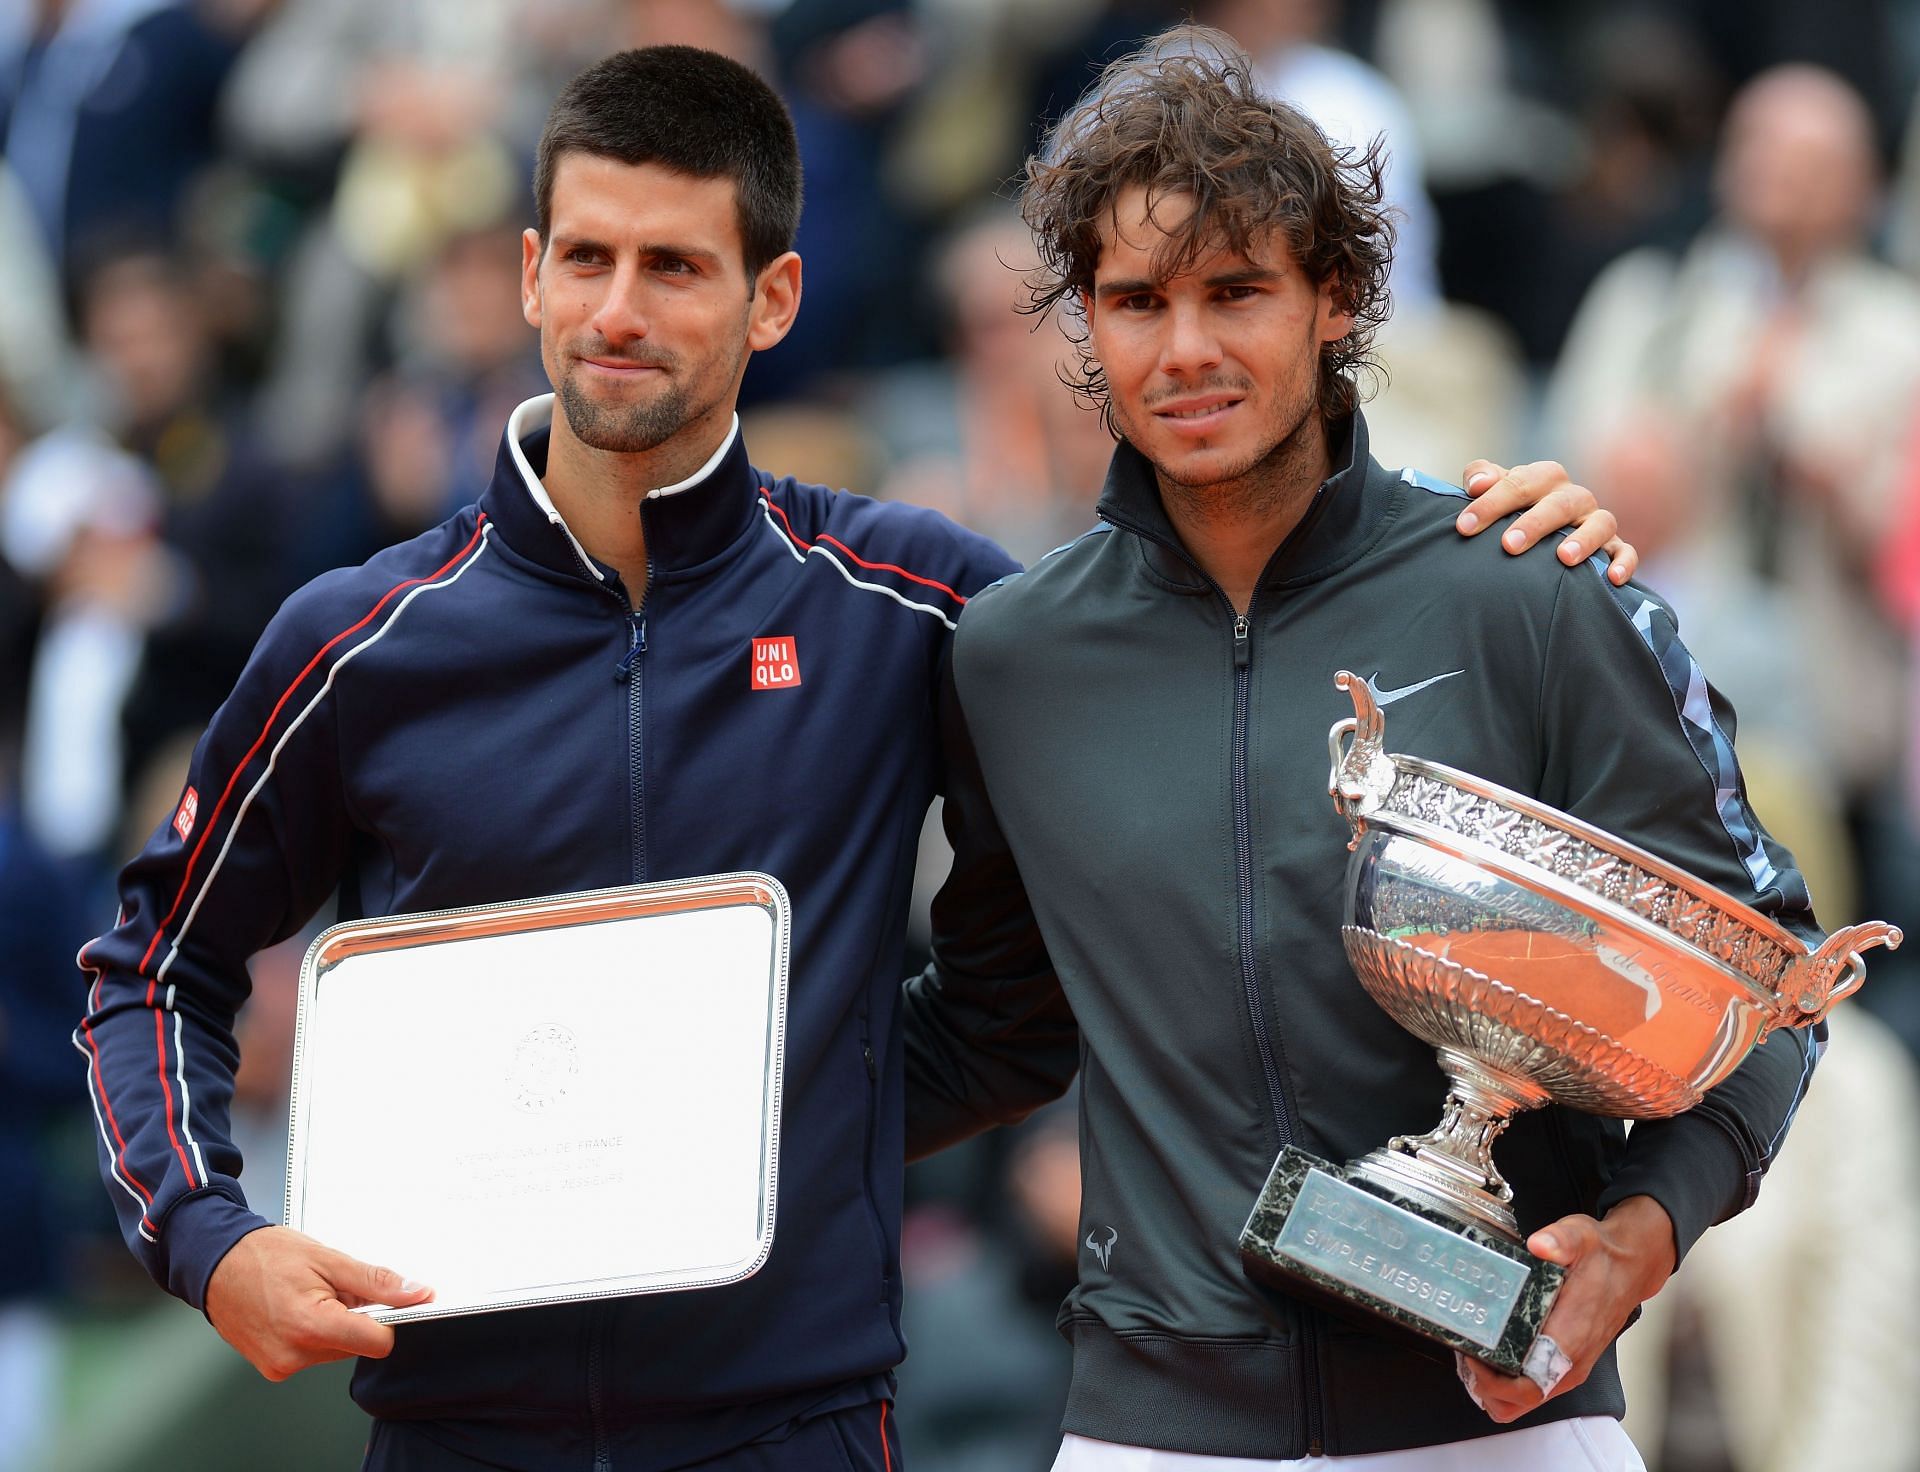 Novak Djokovic and Rafael Nadal will be gunning for their 23rd Major at Roland Garros this year